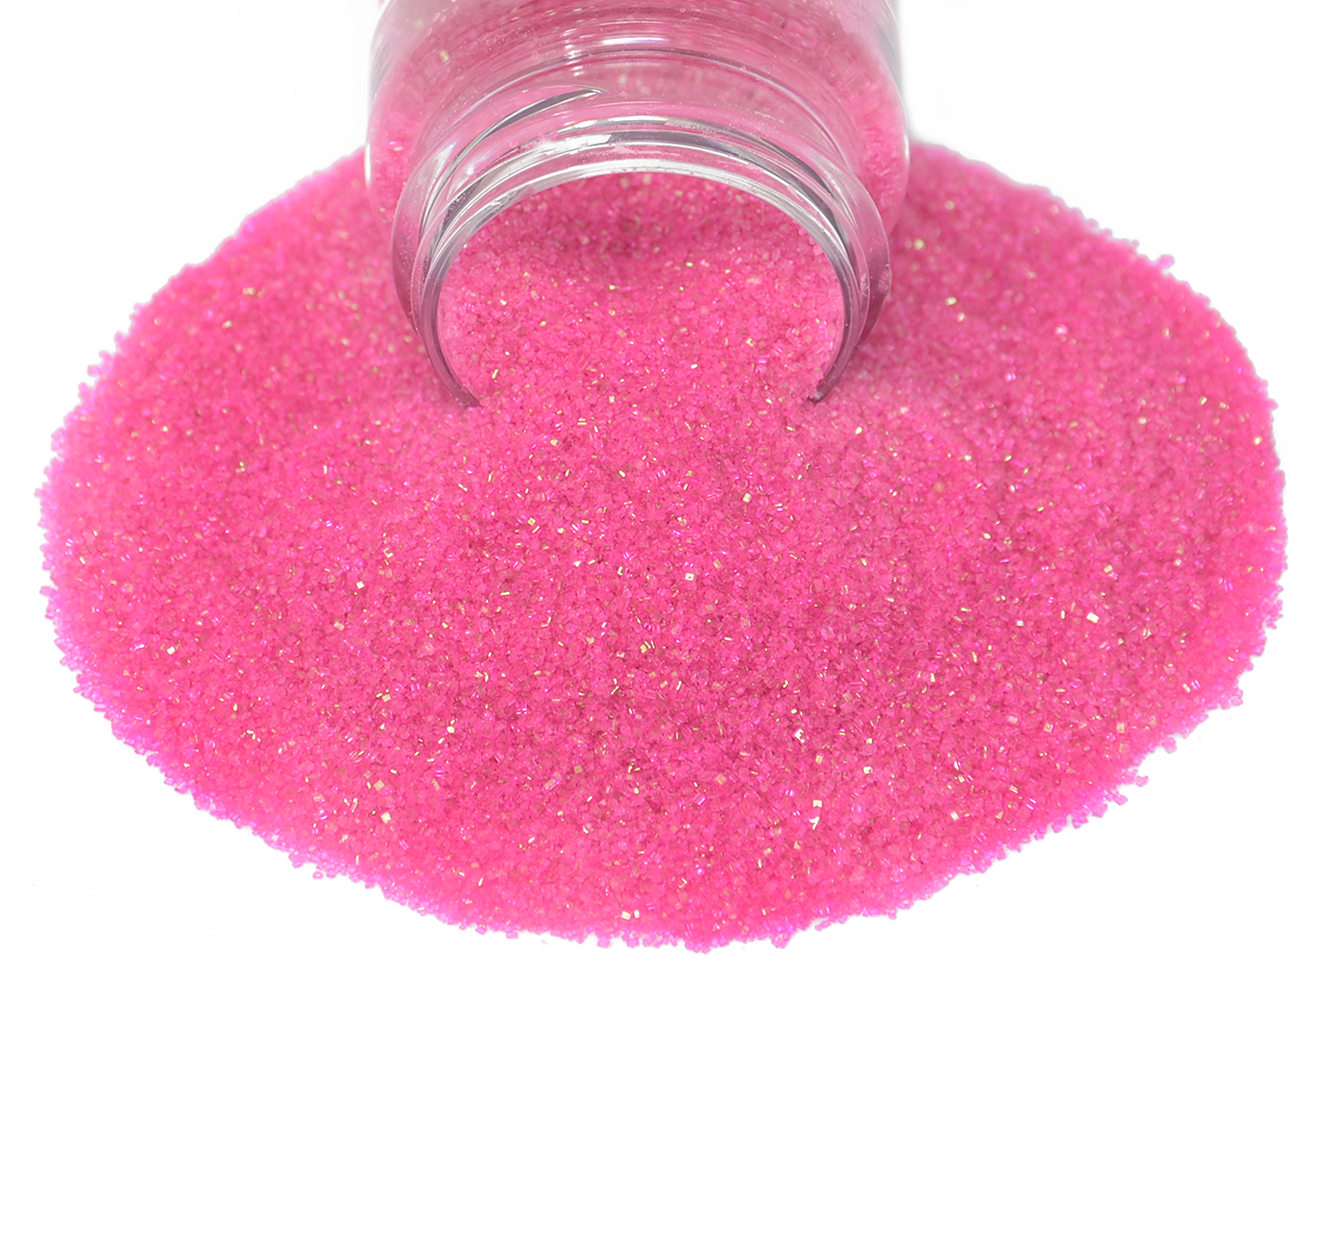 Tourmaline - Hot Pink Sanding Sugar 4oz